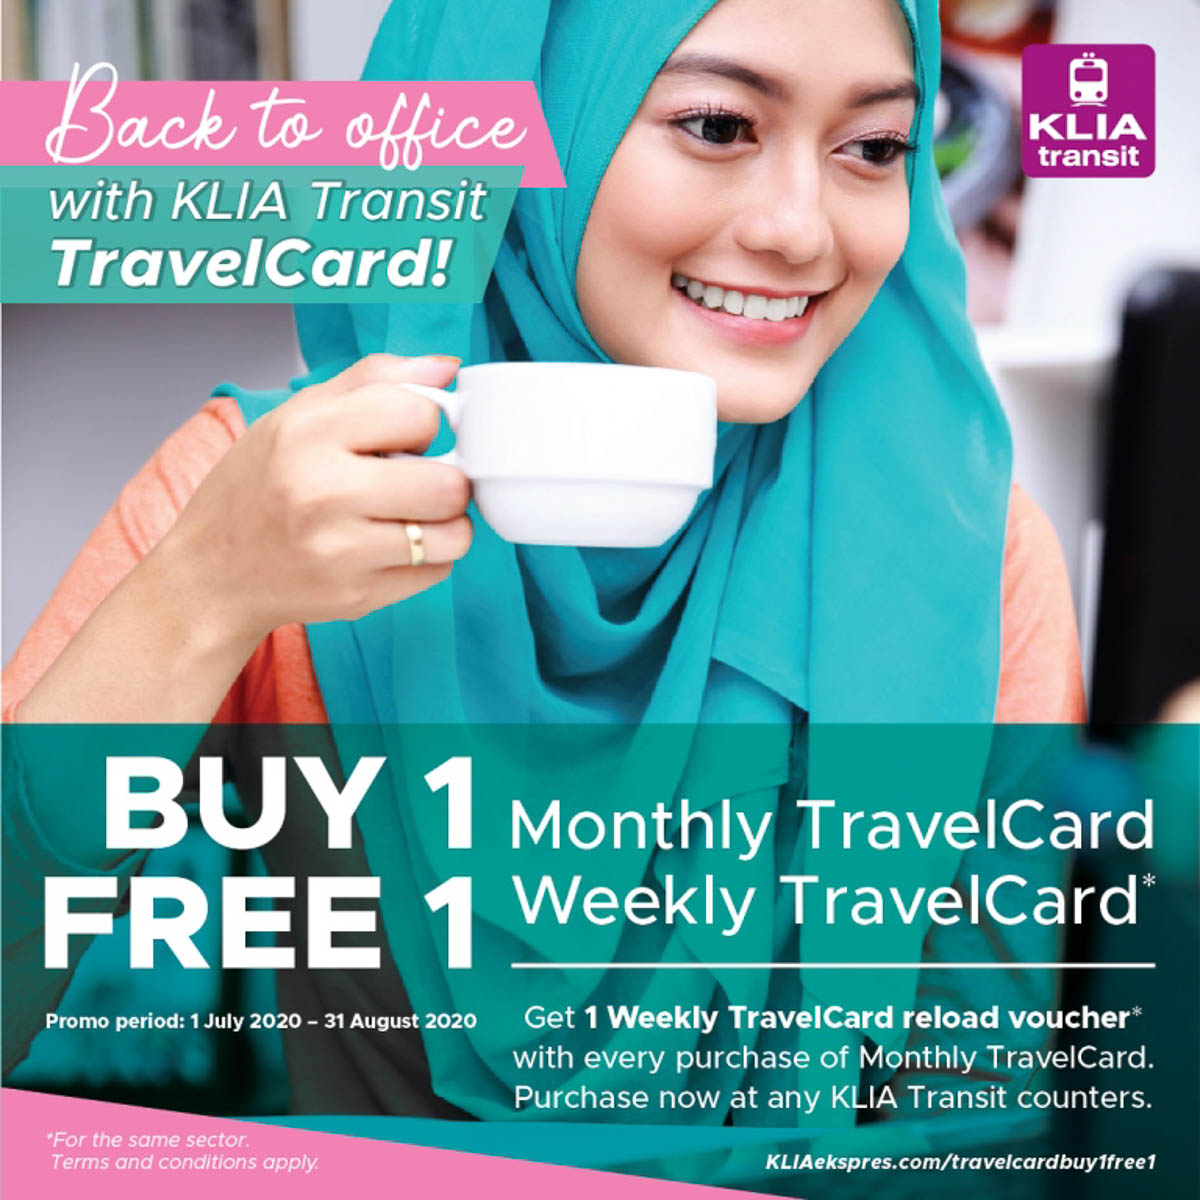 TravelCard